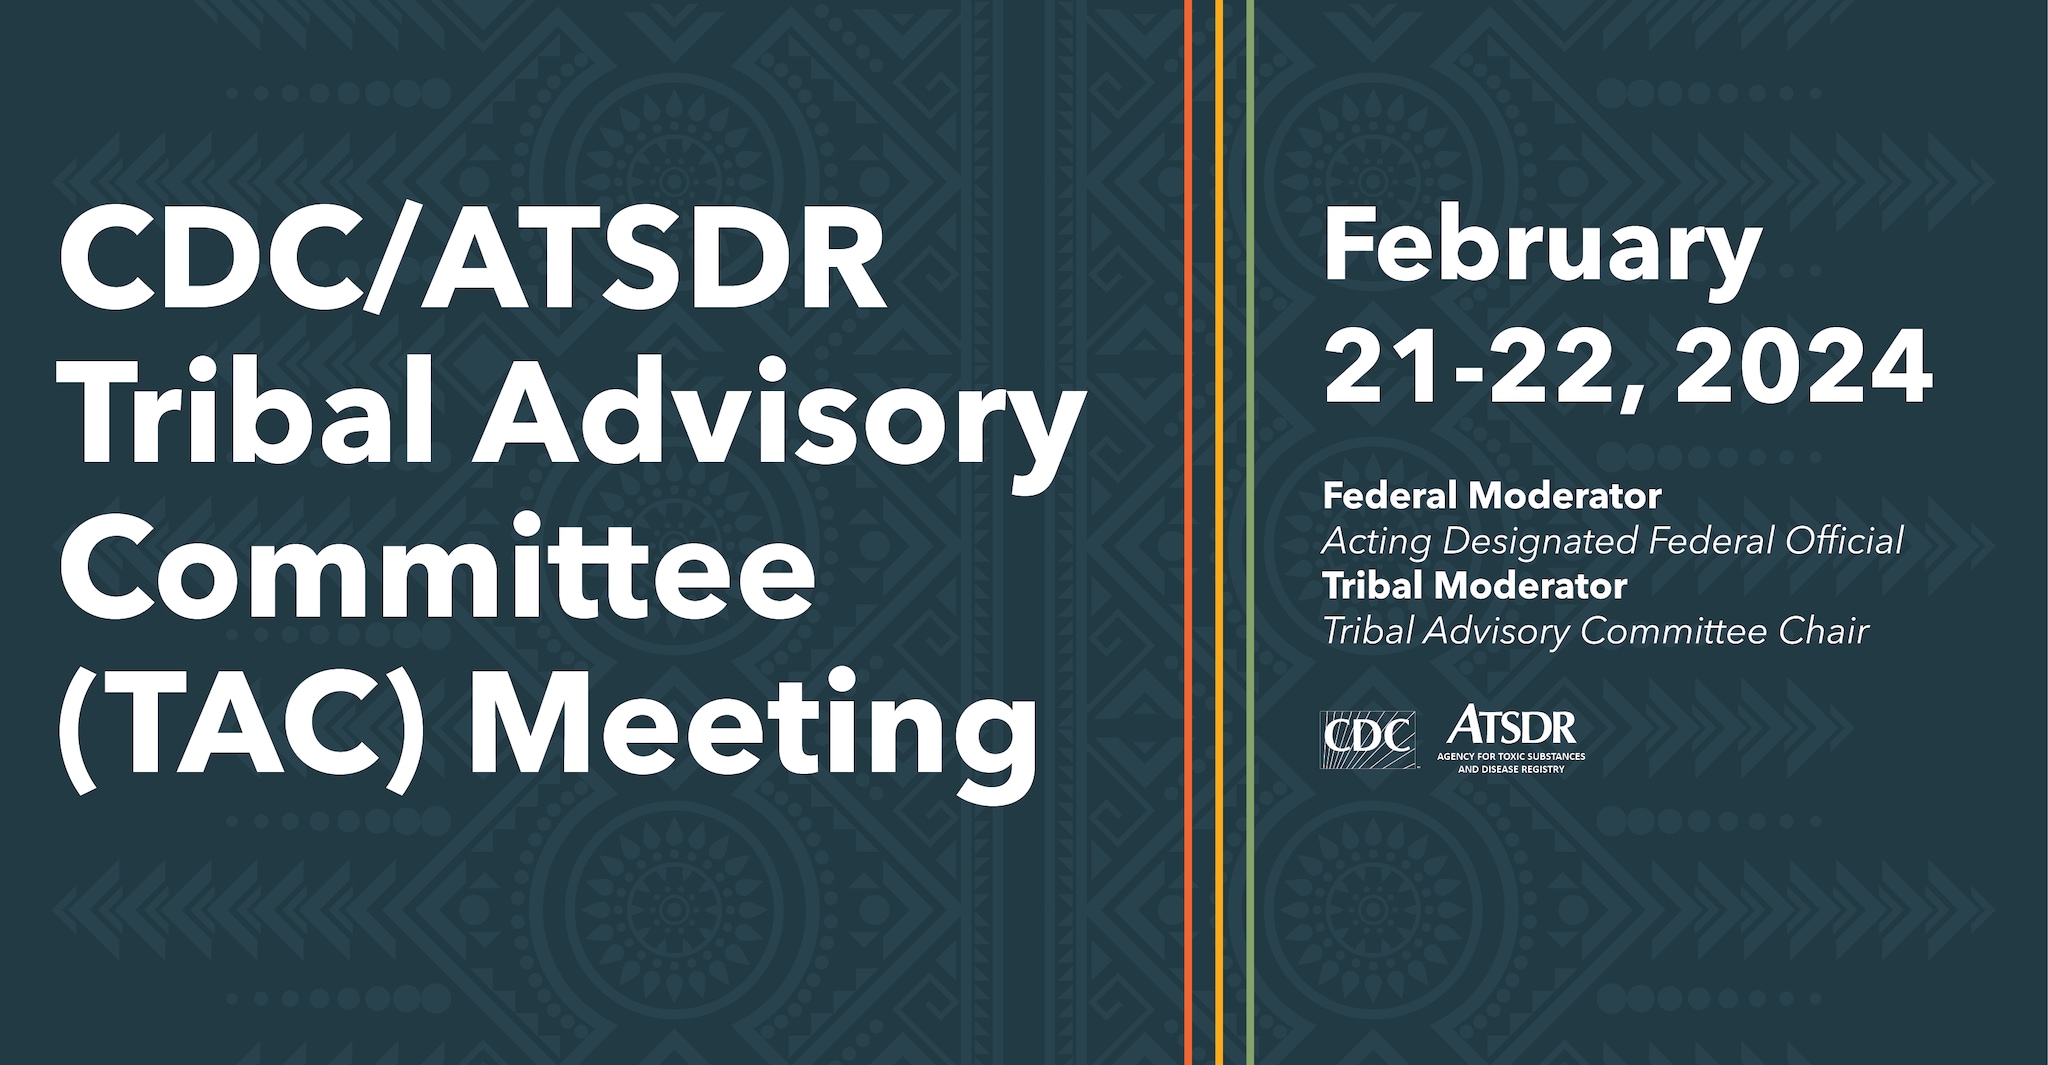 CDC/ATSDR Tribal Advisory Committee (TAC) Meeting